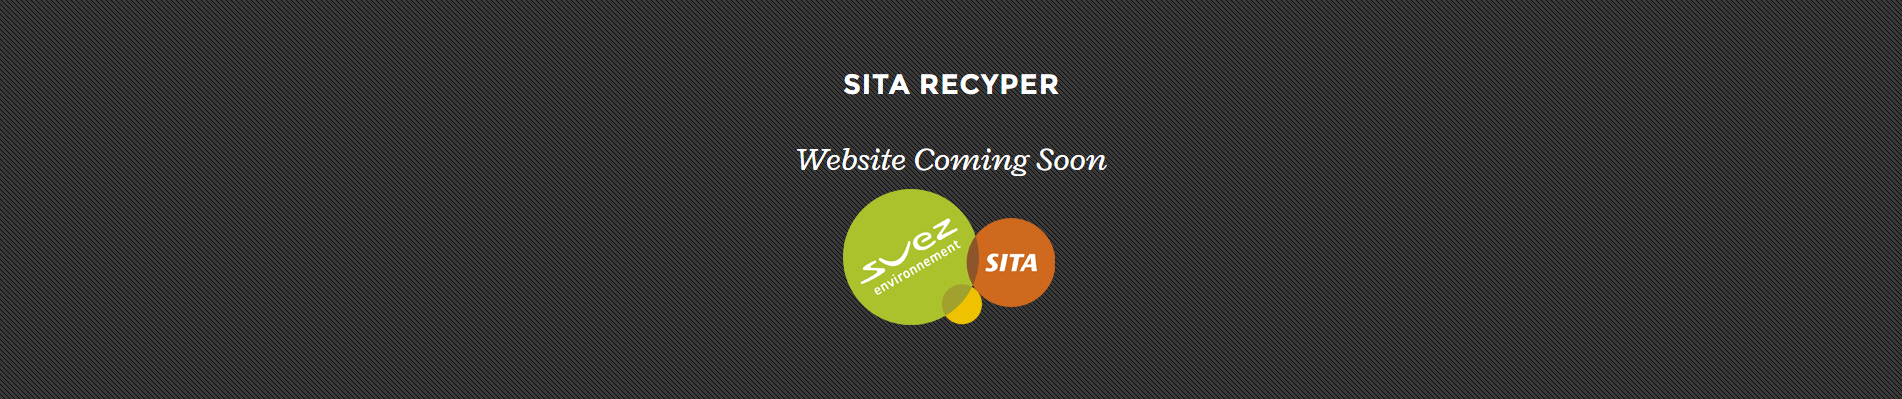 Sita Recyper